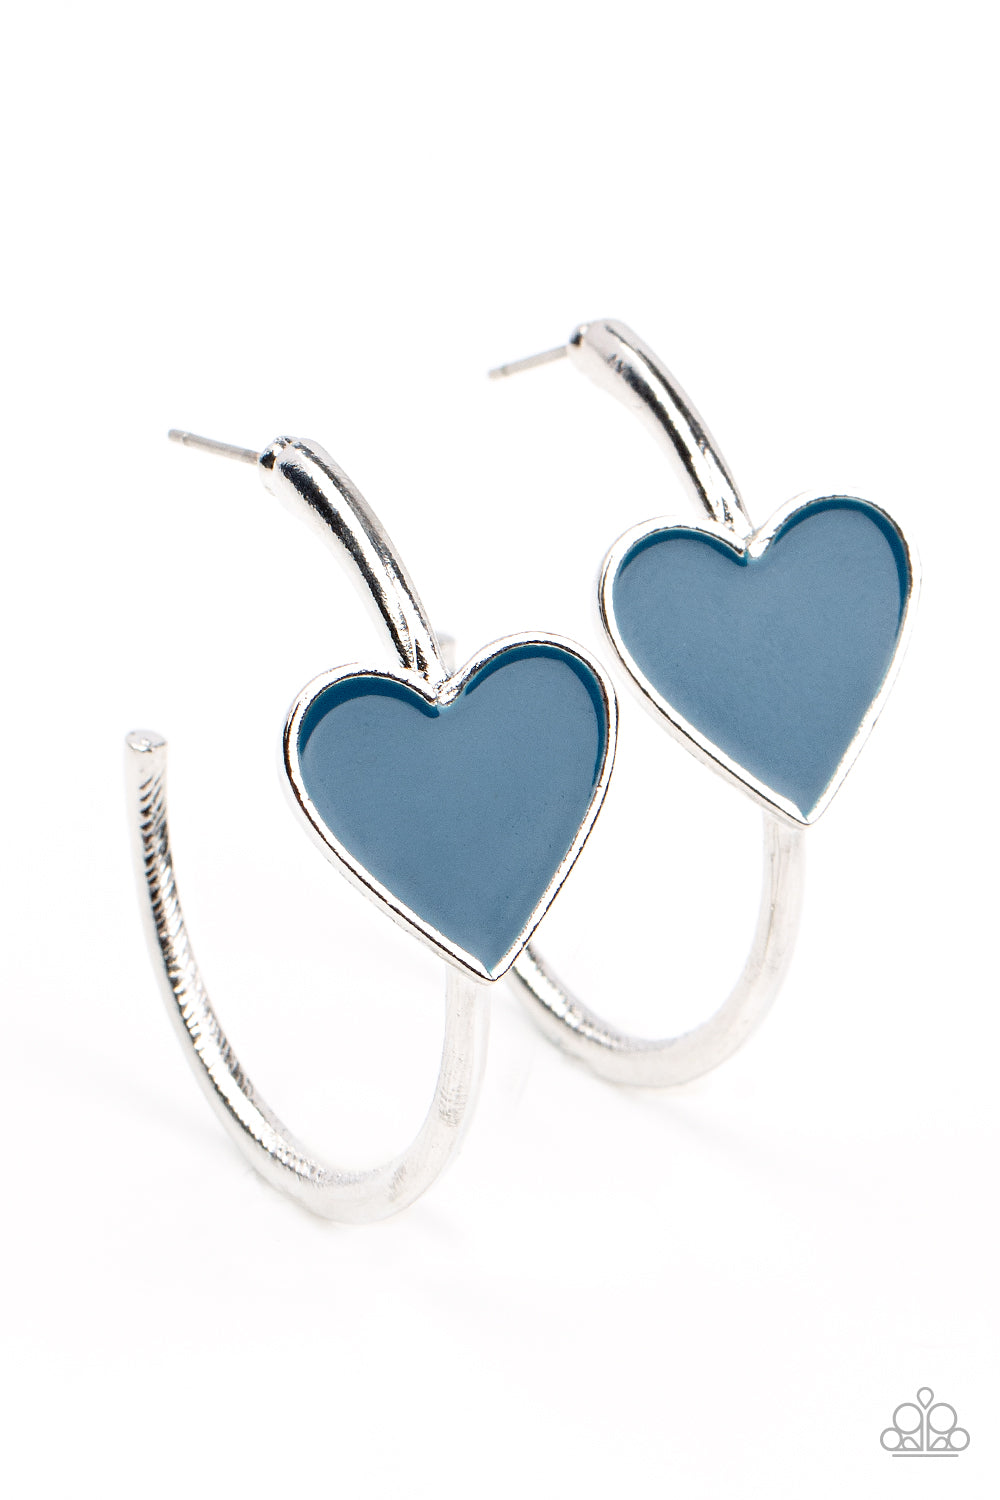 Kiss Up - Blue Hoop Earrings - Princess Glam Shop